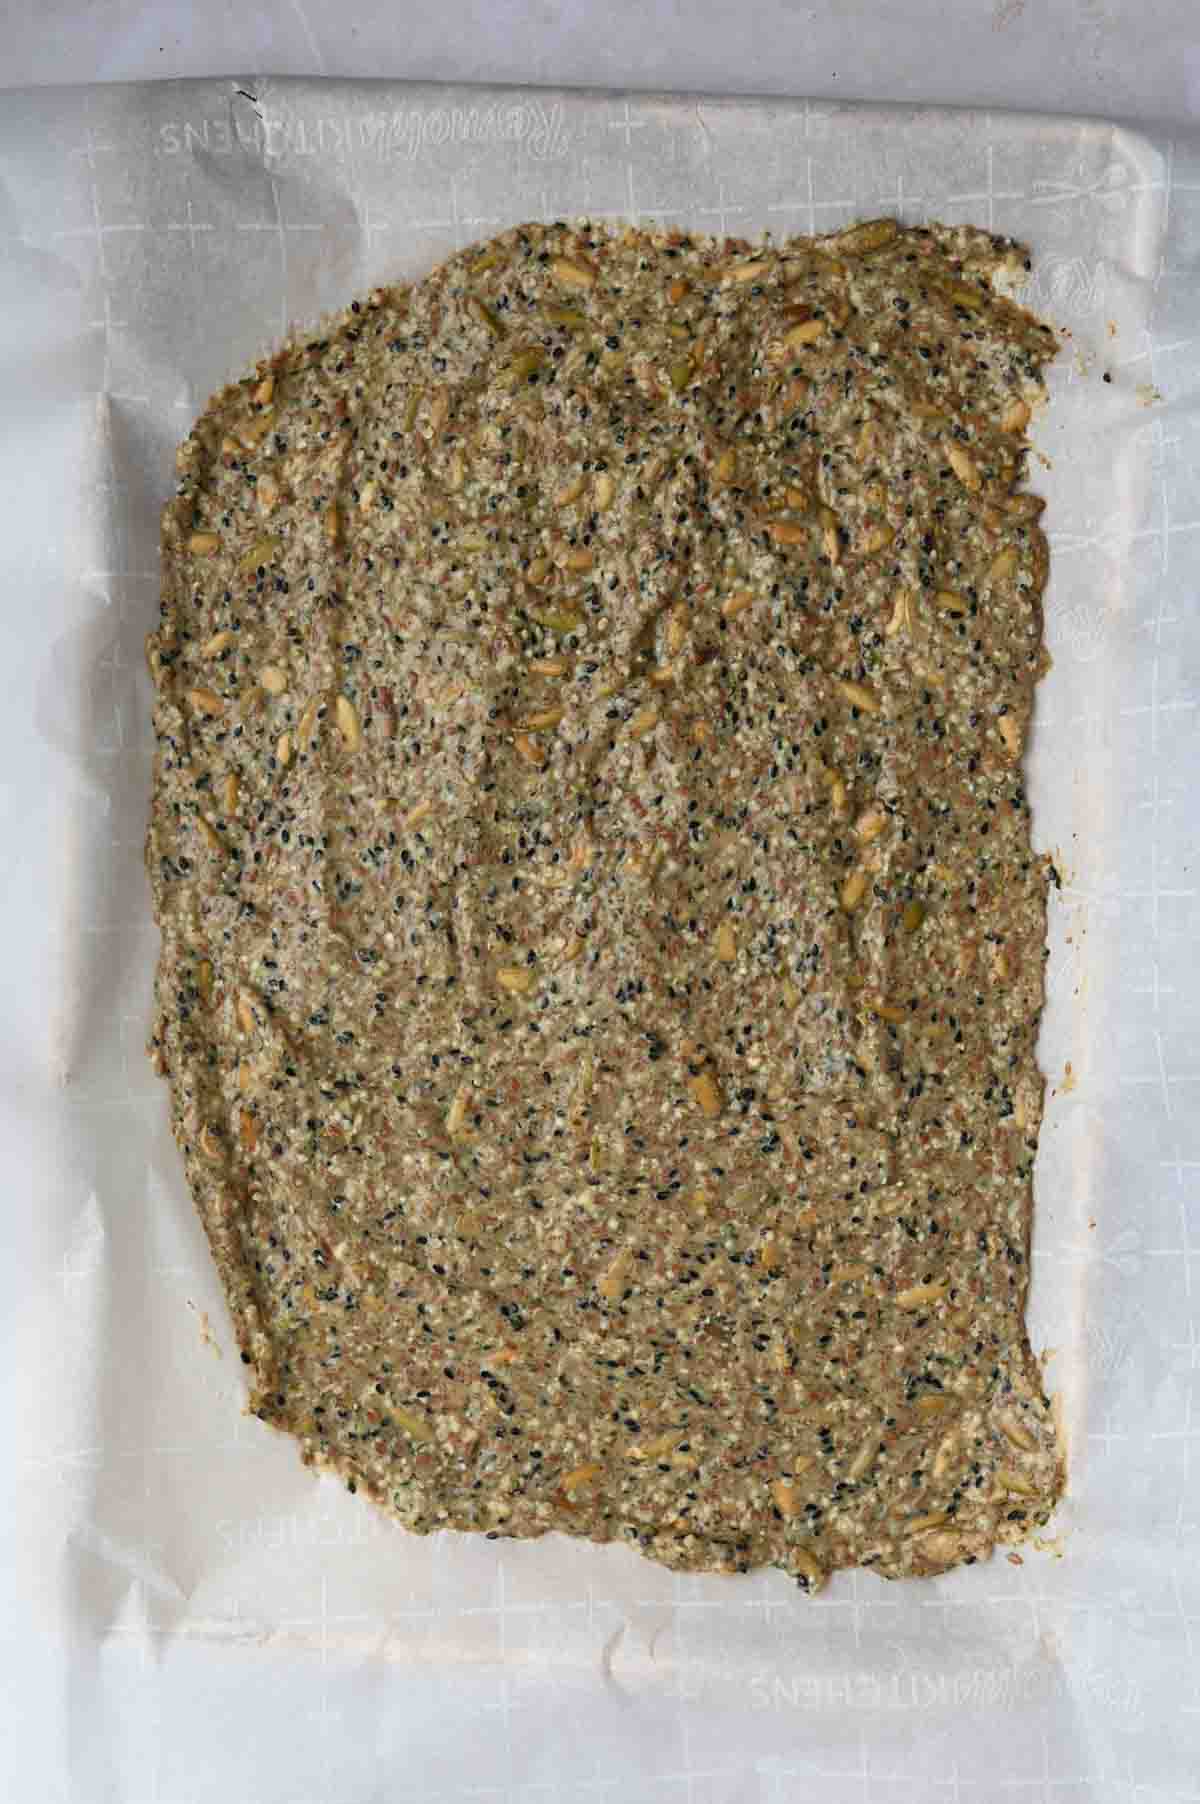 Cracker dough flattened out onto a parchment paper baking sheet.